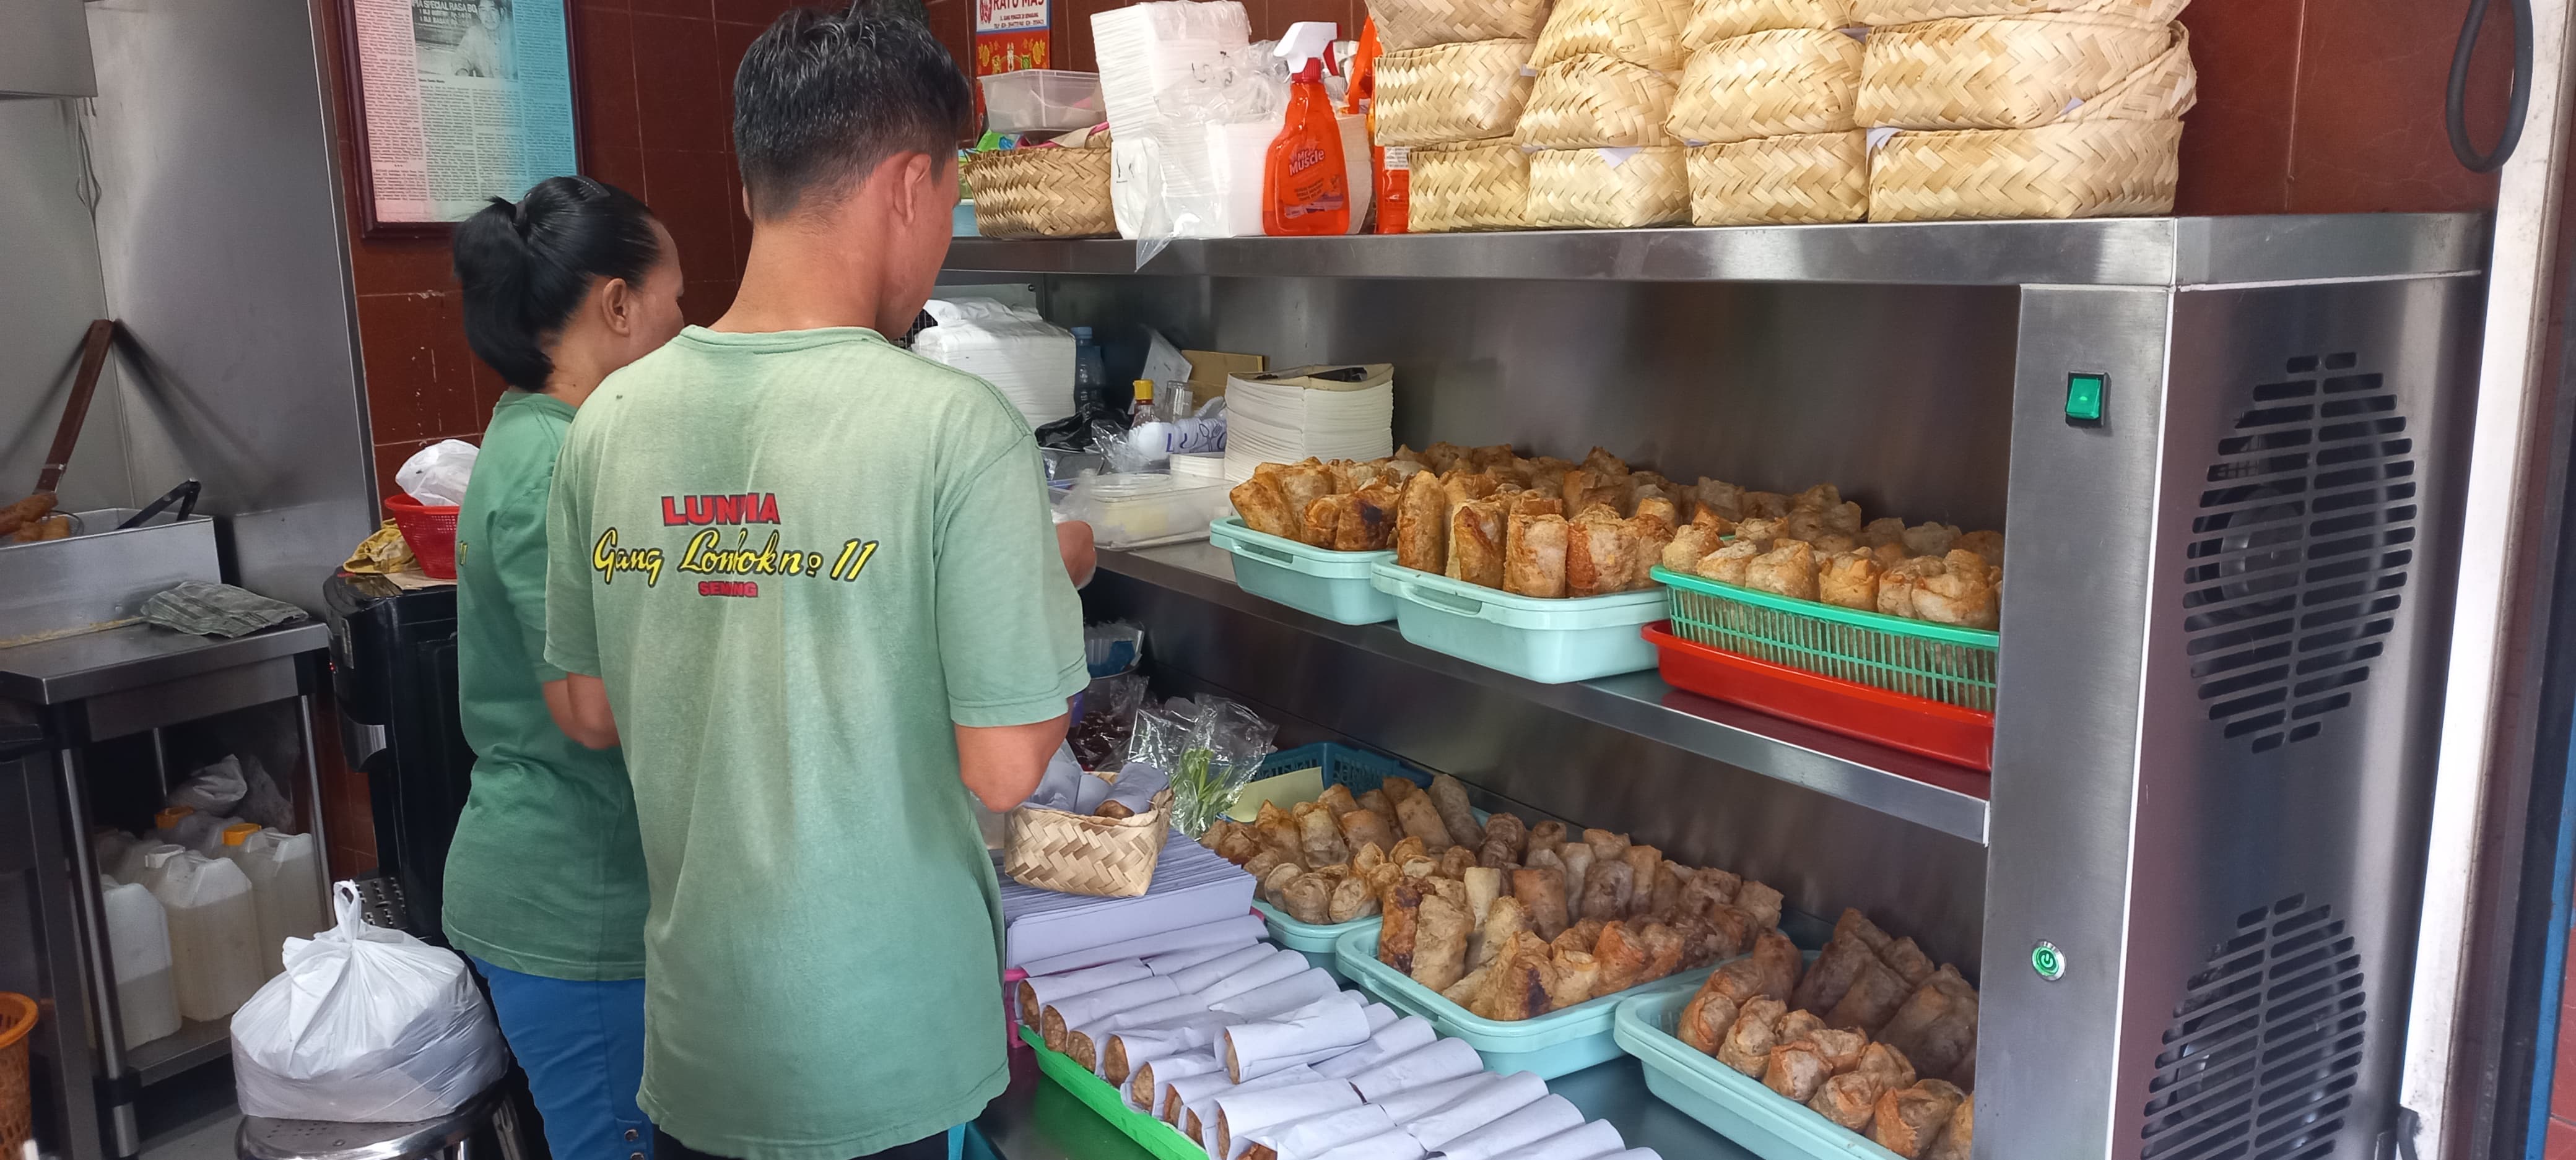 Lunpia goreng siap dikemas sebagai buah tangan khas Semarang dalam wadah besek. Foto: Dokumen Pribadi